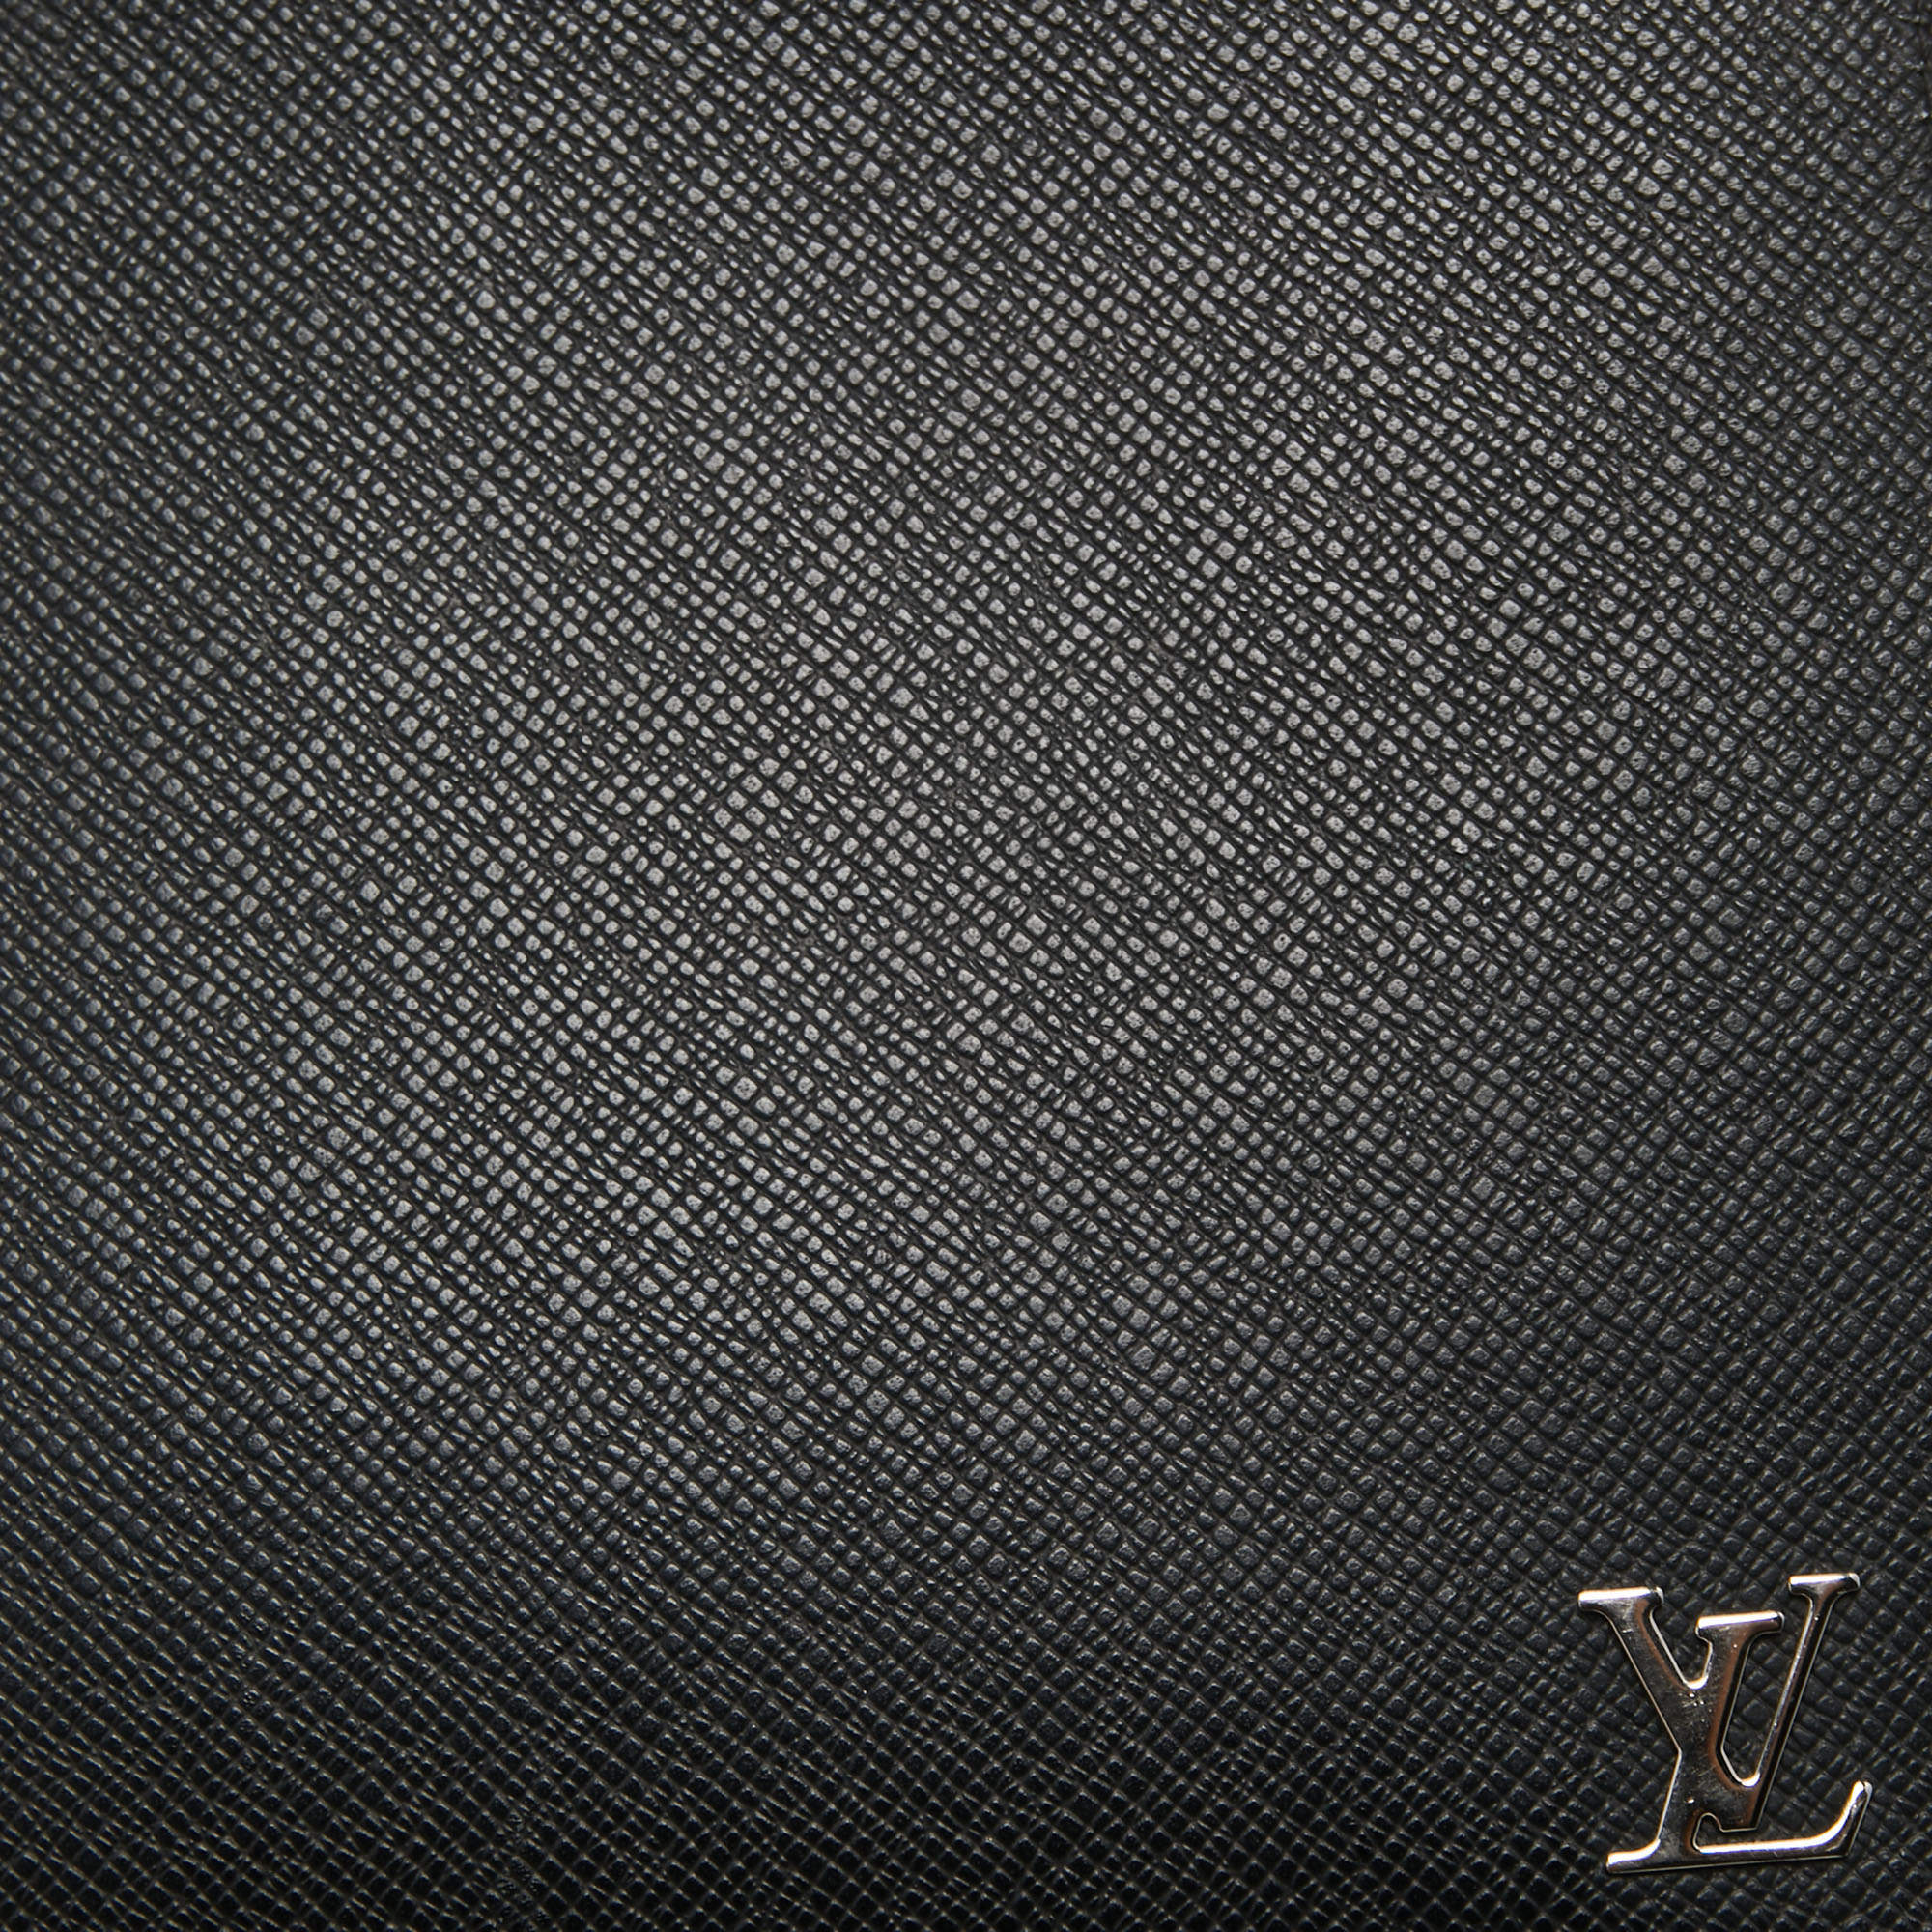 Shop Louis Vuitton TAIGA Louis Vuitton POCHETTE VOYAGE by Bellaris